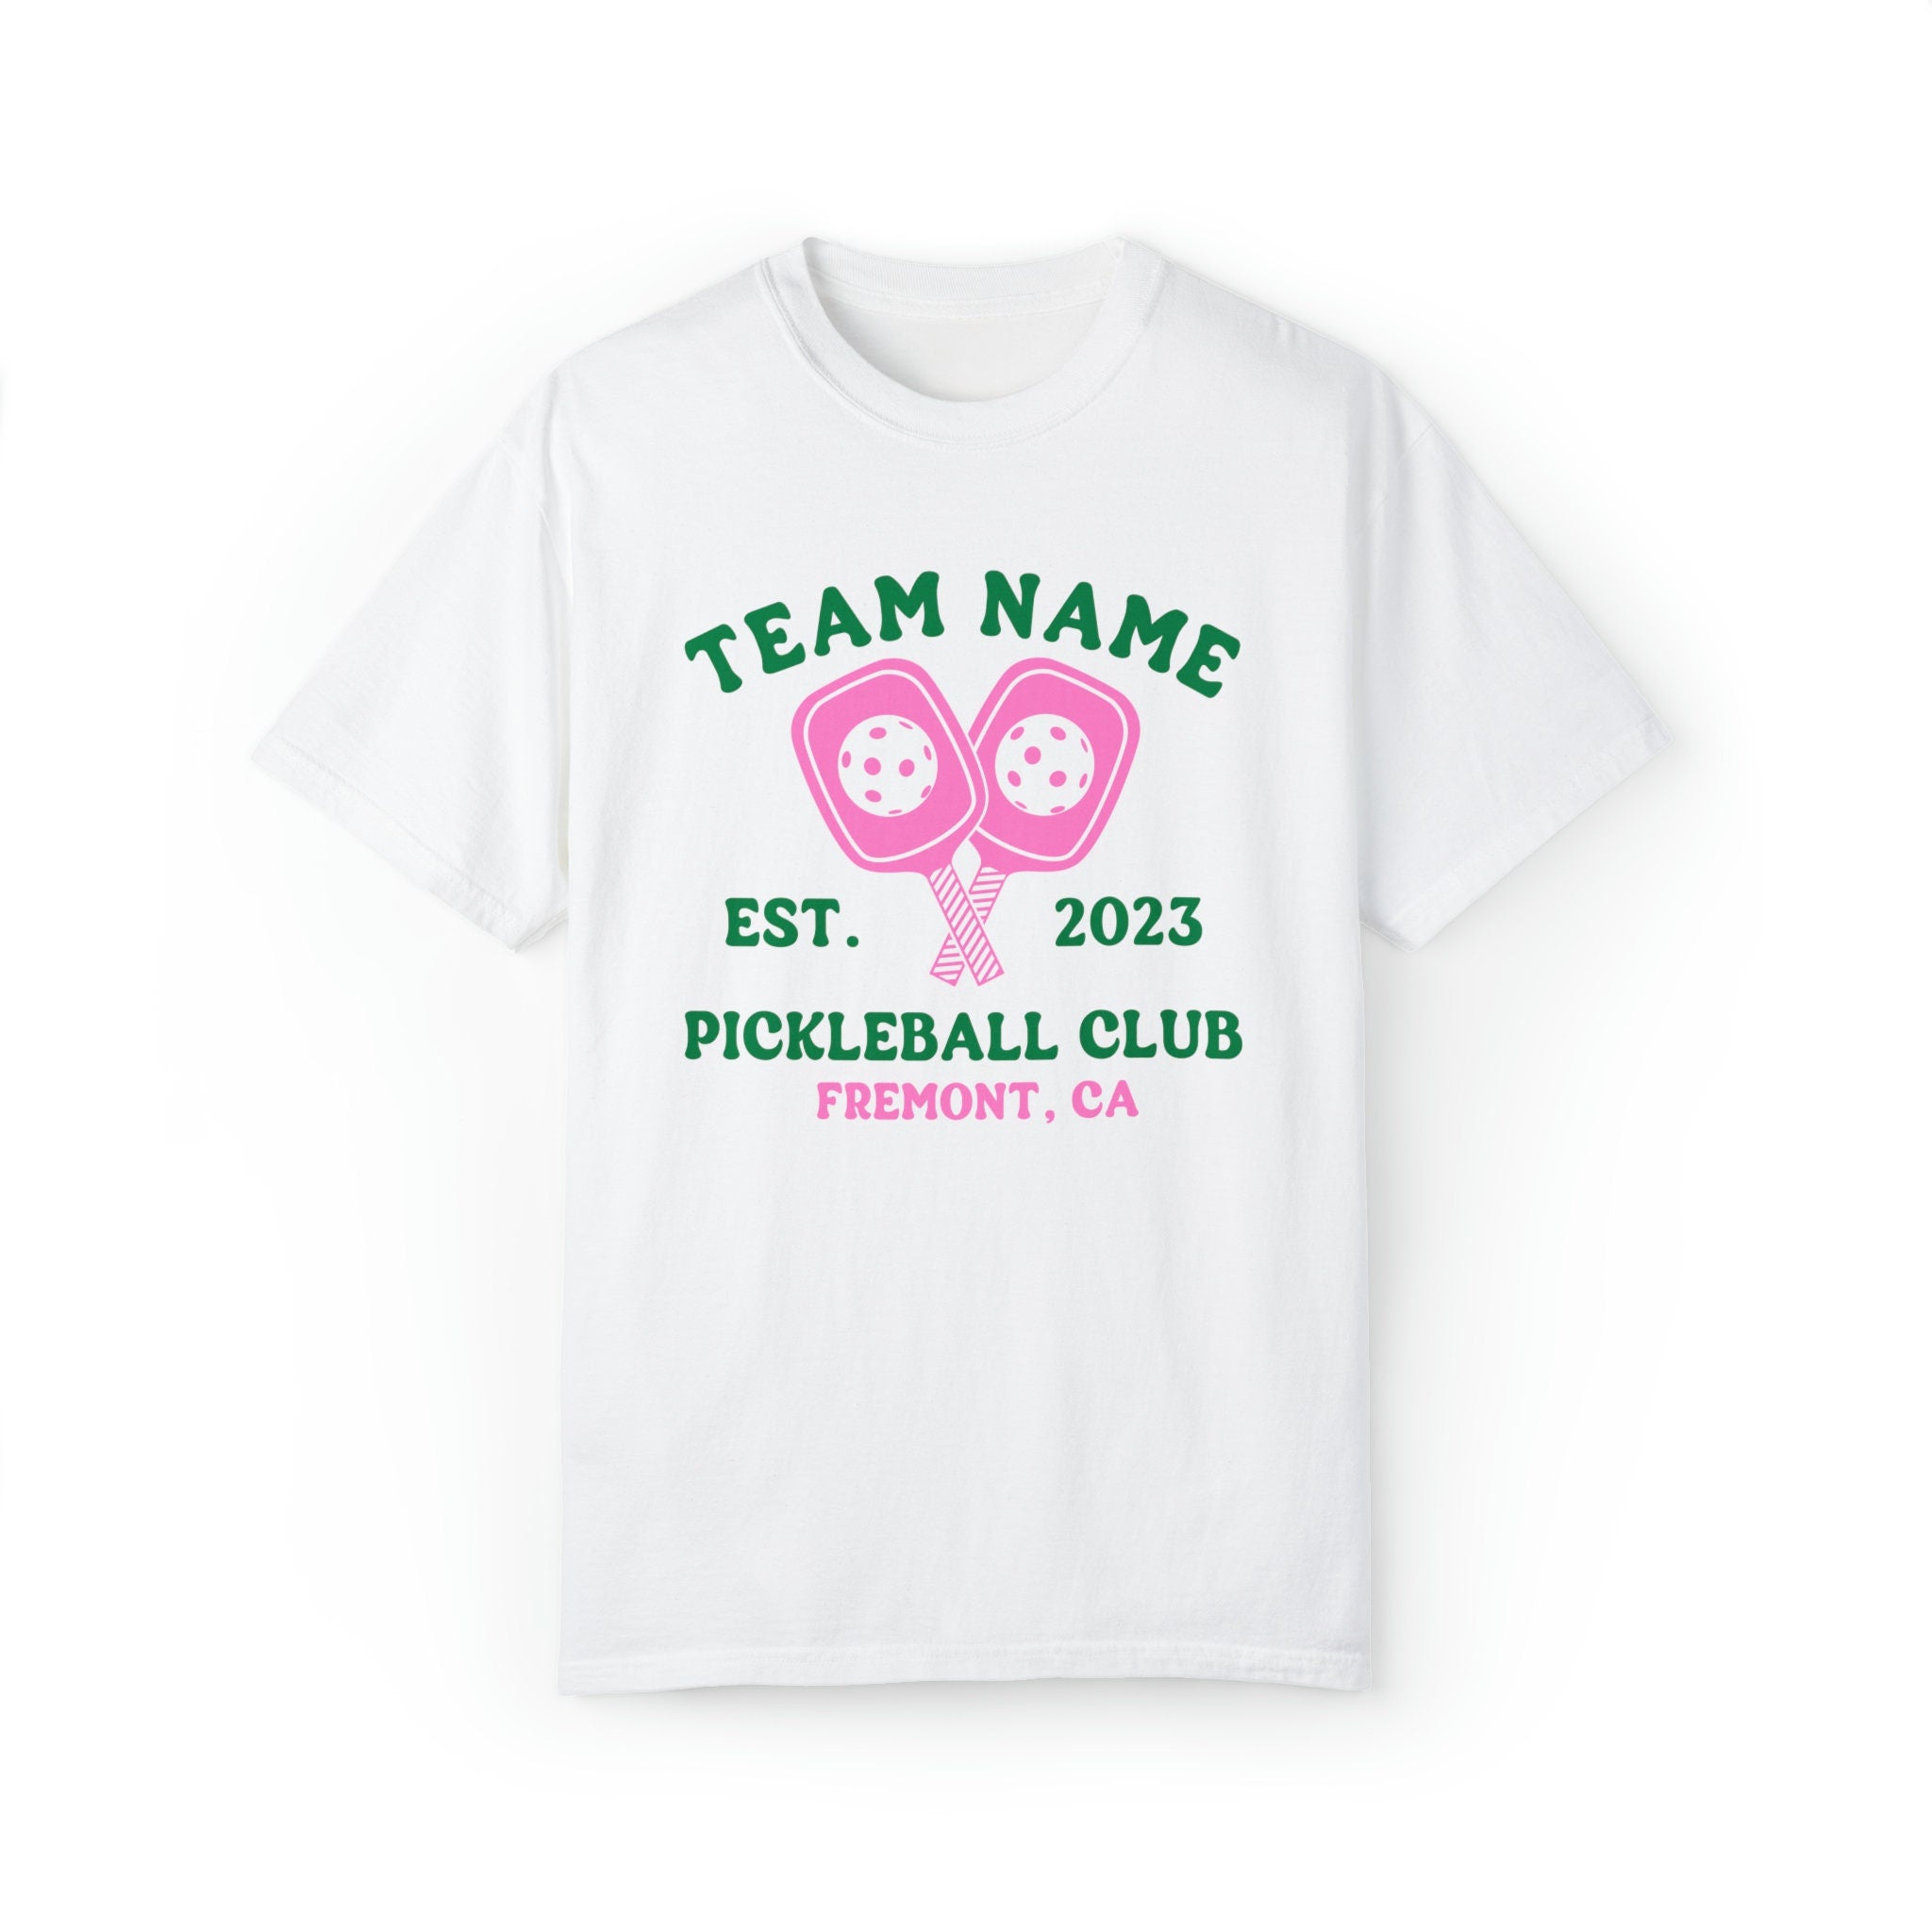 Personalized Pickleball Club Shirt, Custom Team Name, Year, Pickleball Tee, Gift for Pickleball Lover Friend